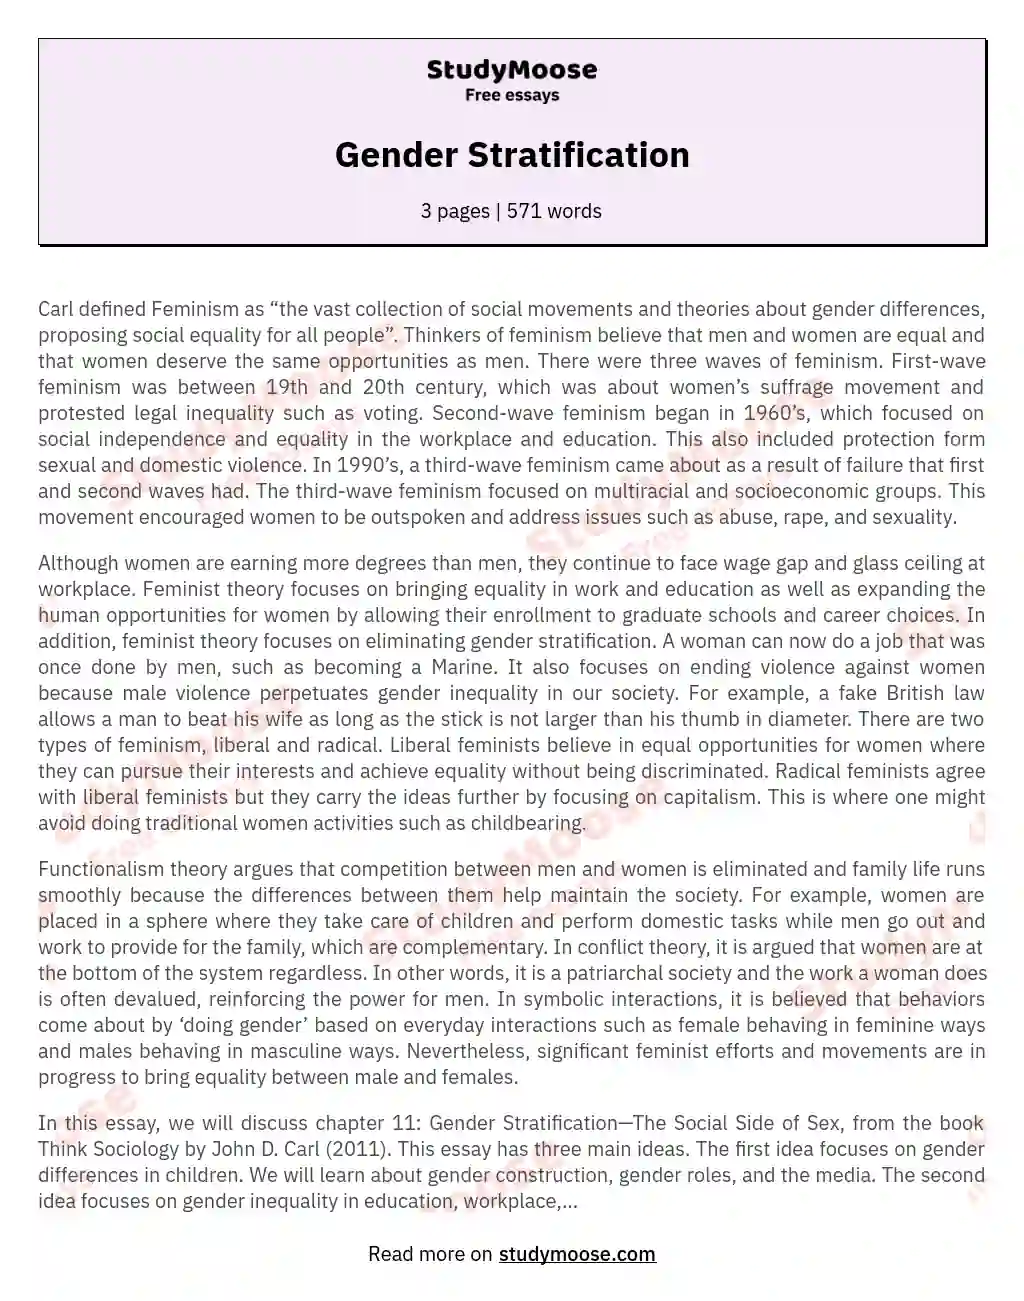 Gender Stratification essay